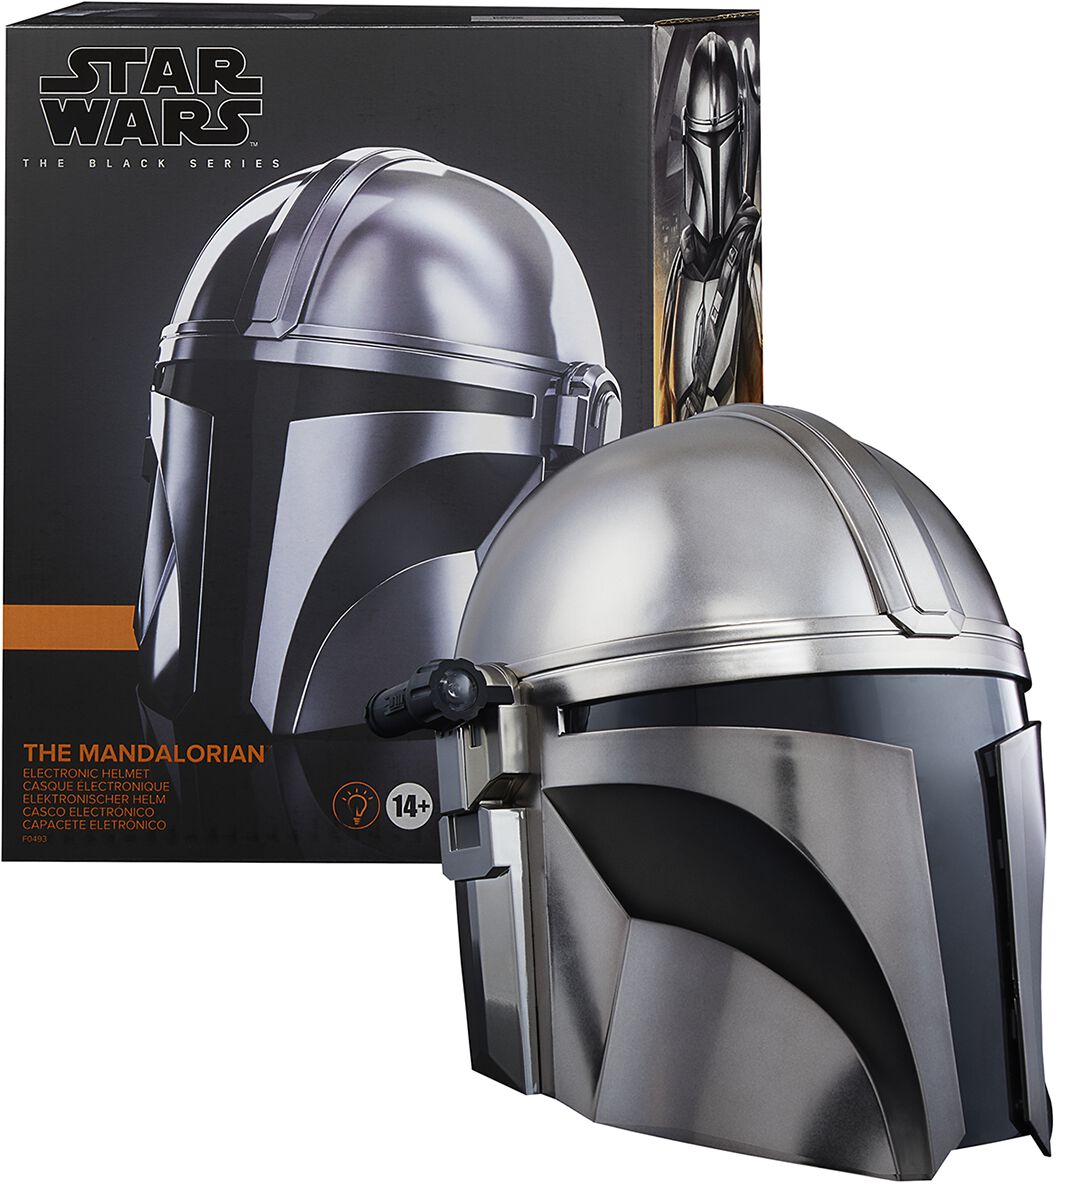 Star Wars The Black Series - The Mandalorian - Electronic Helmet Replica multicolor